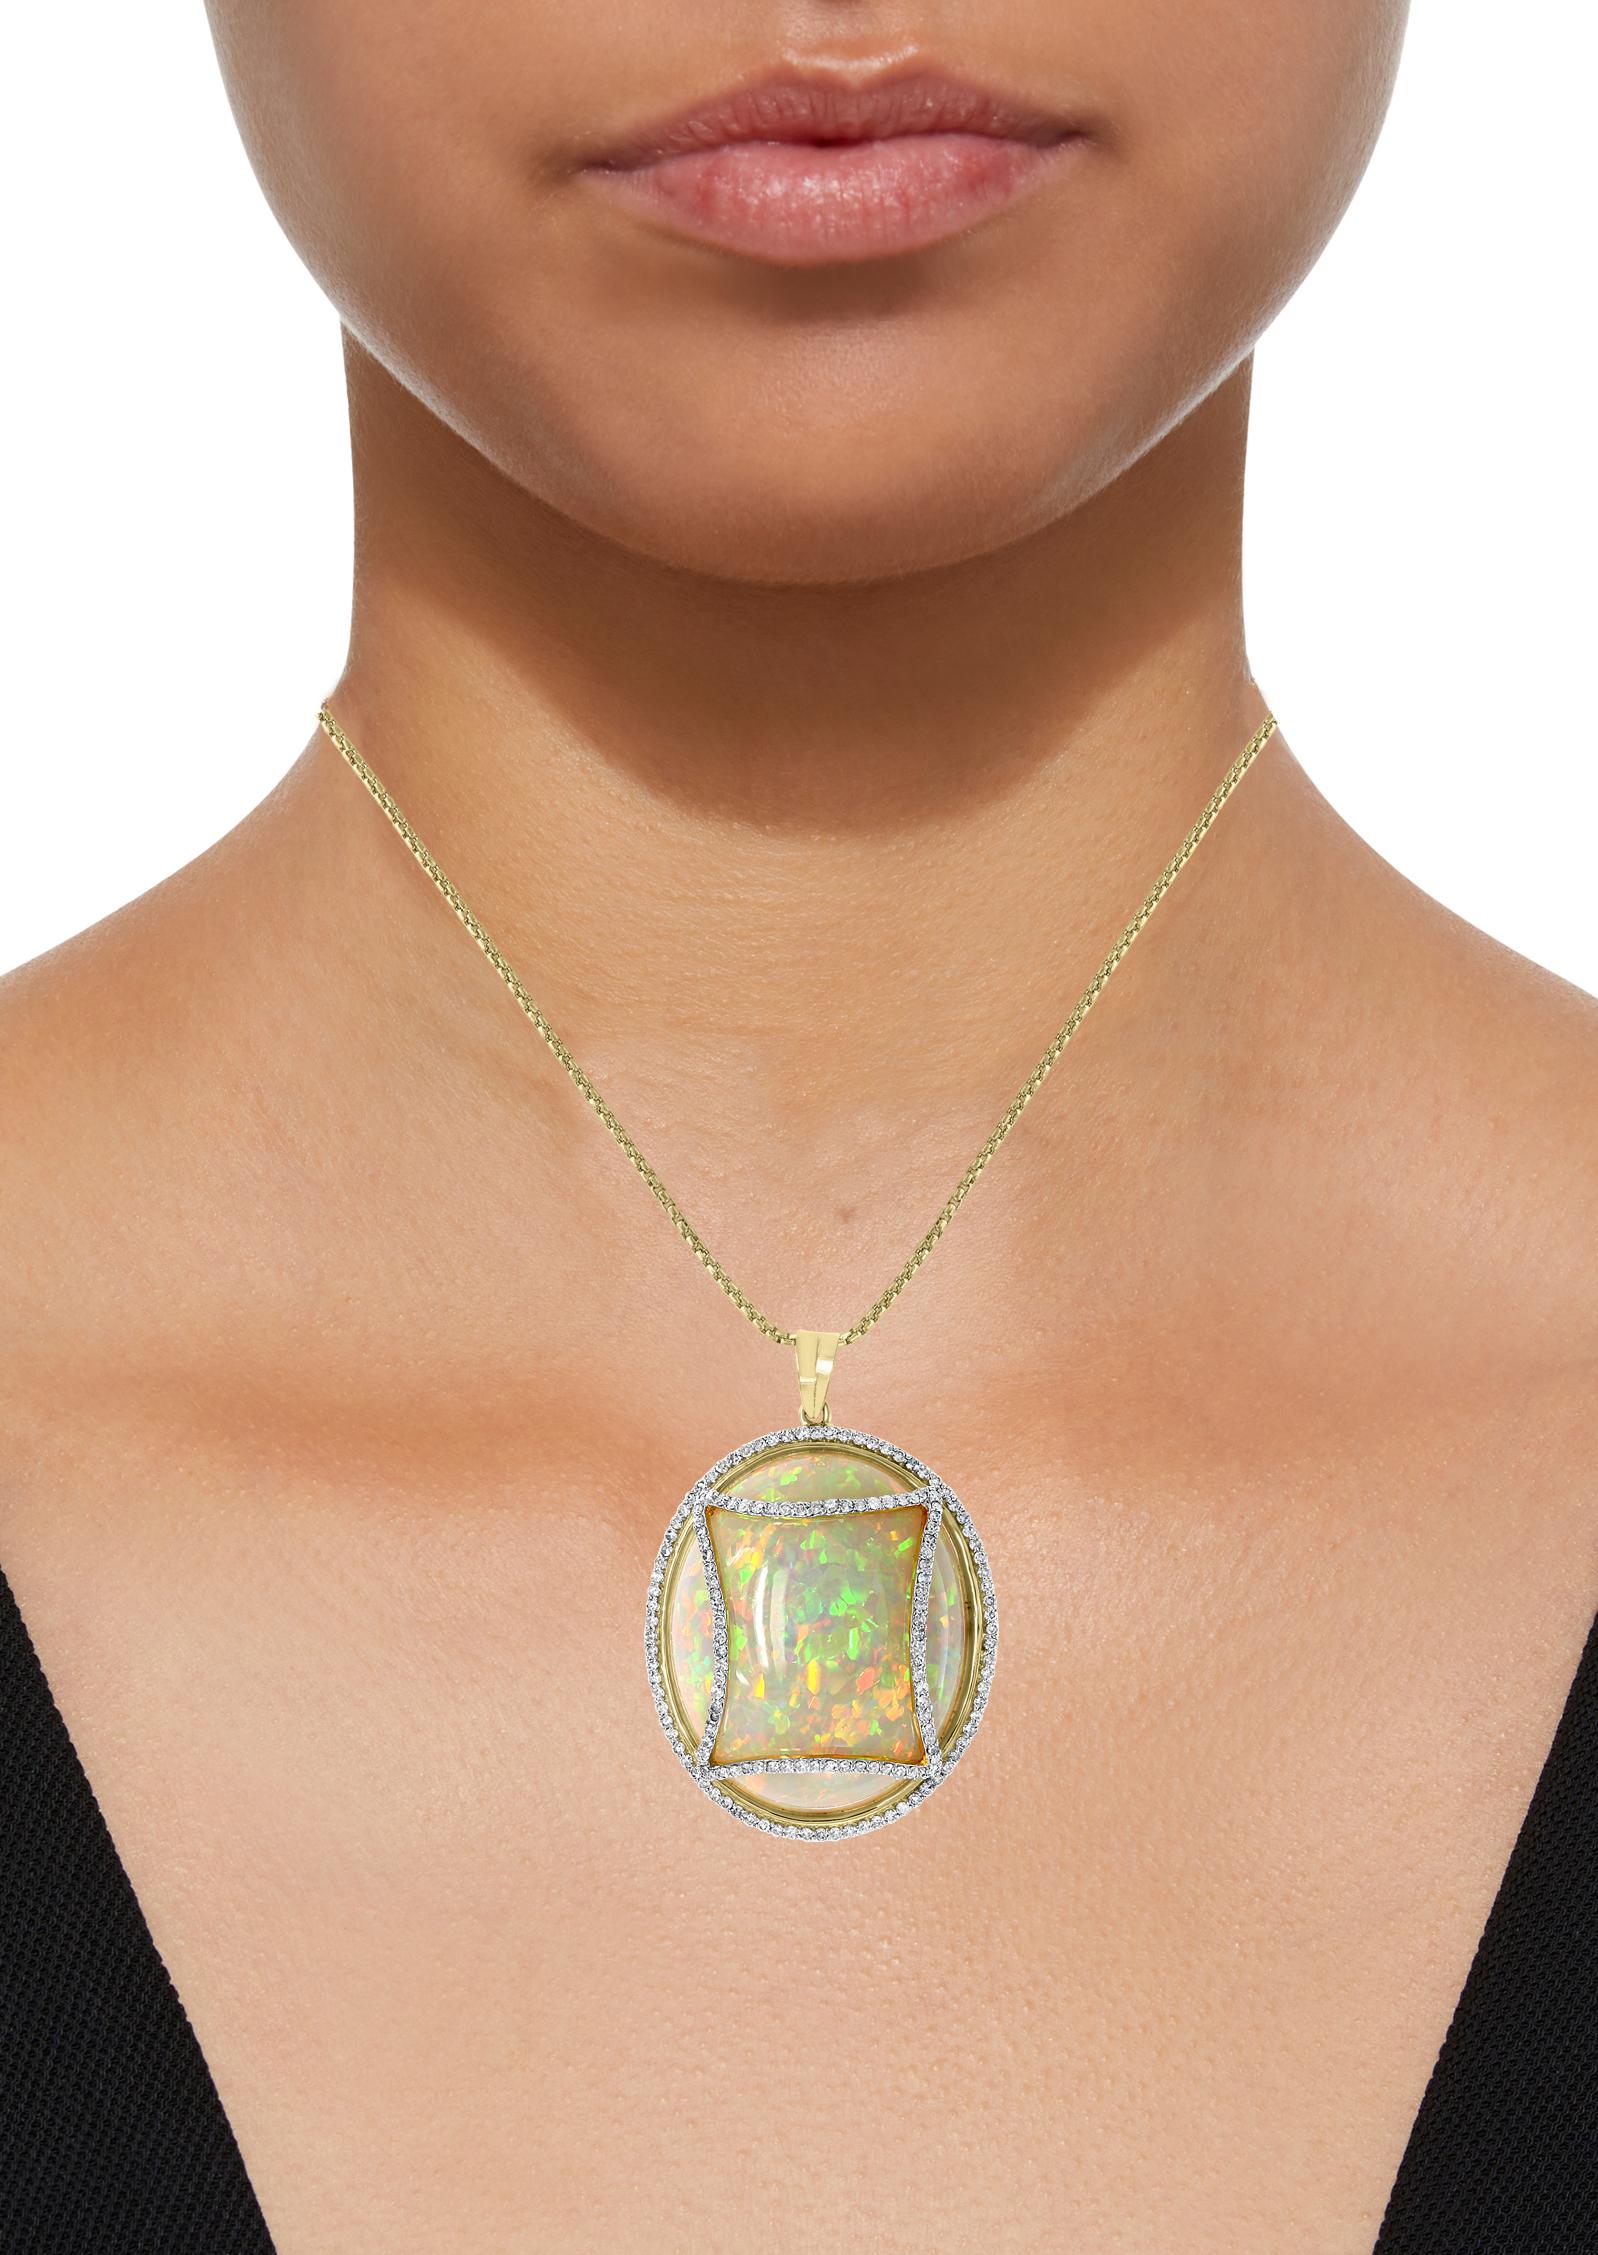 70 Carat Oval Ethiopian Opal and Diamond Pendant or Necklace 14 Karat Gold For Sale 1